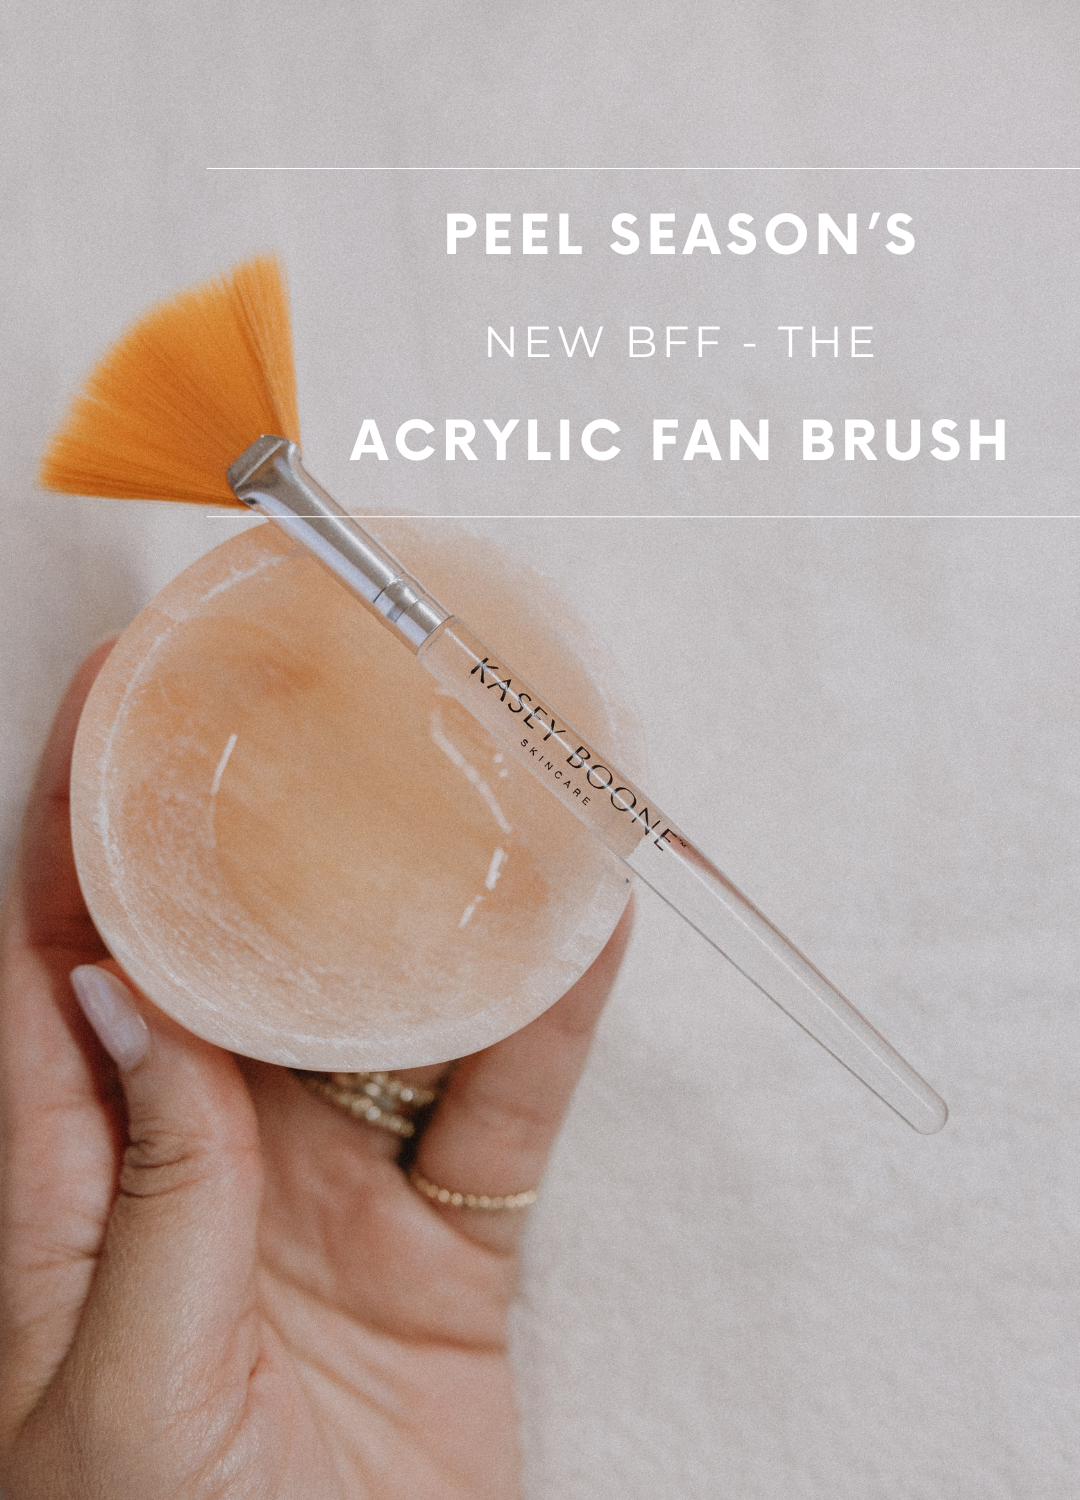 Peel Season's New BFF - The Acrylic Fan Brush